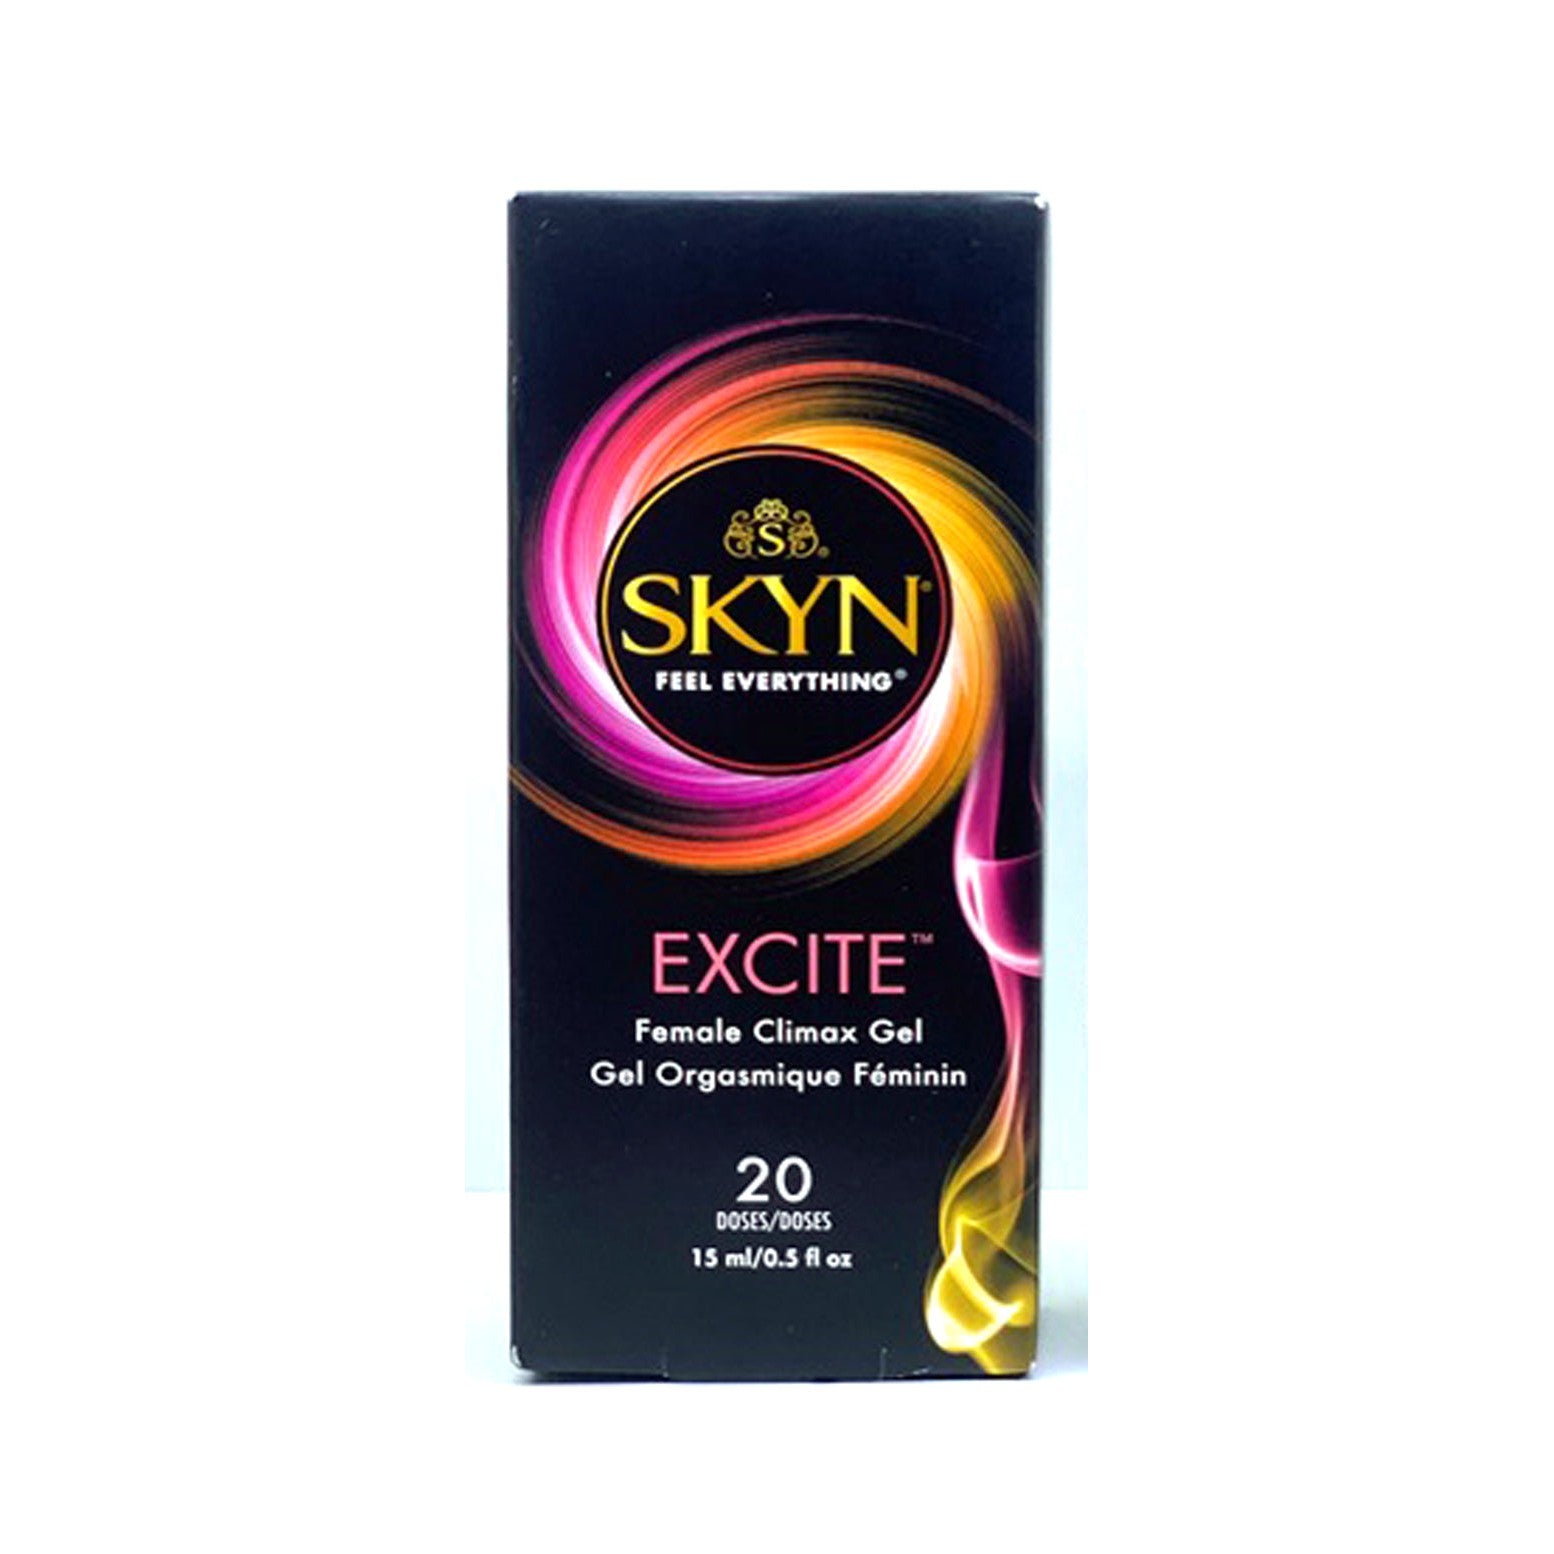 Skyn Excite Female Sexual Stimulating Gel -  15 ml / 0.5 Oz.